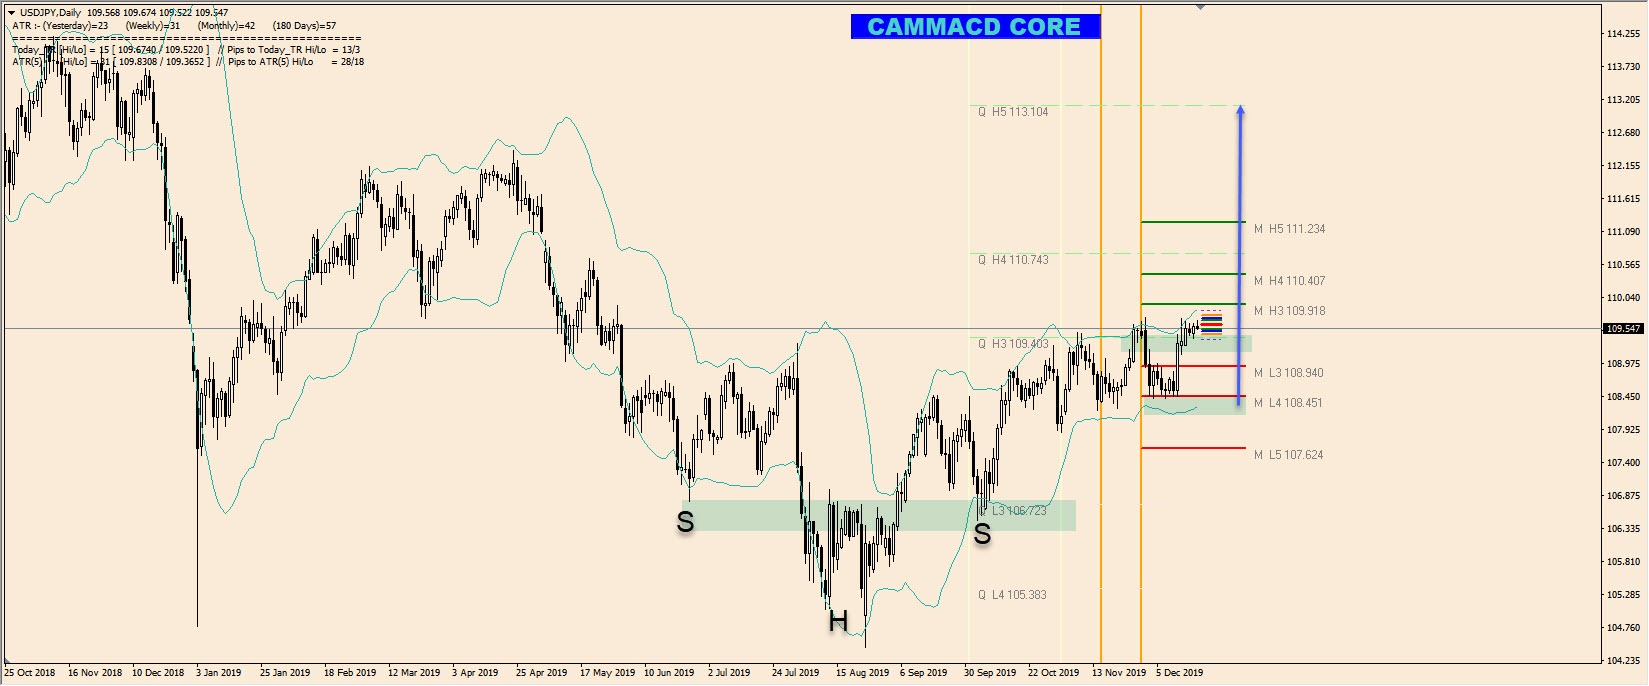 USD/JPY Price Analysis 2020 - Camarilla Pivot Points